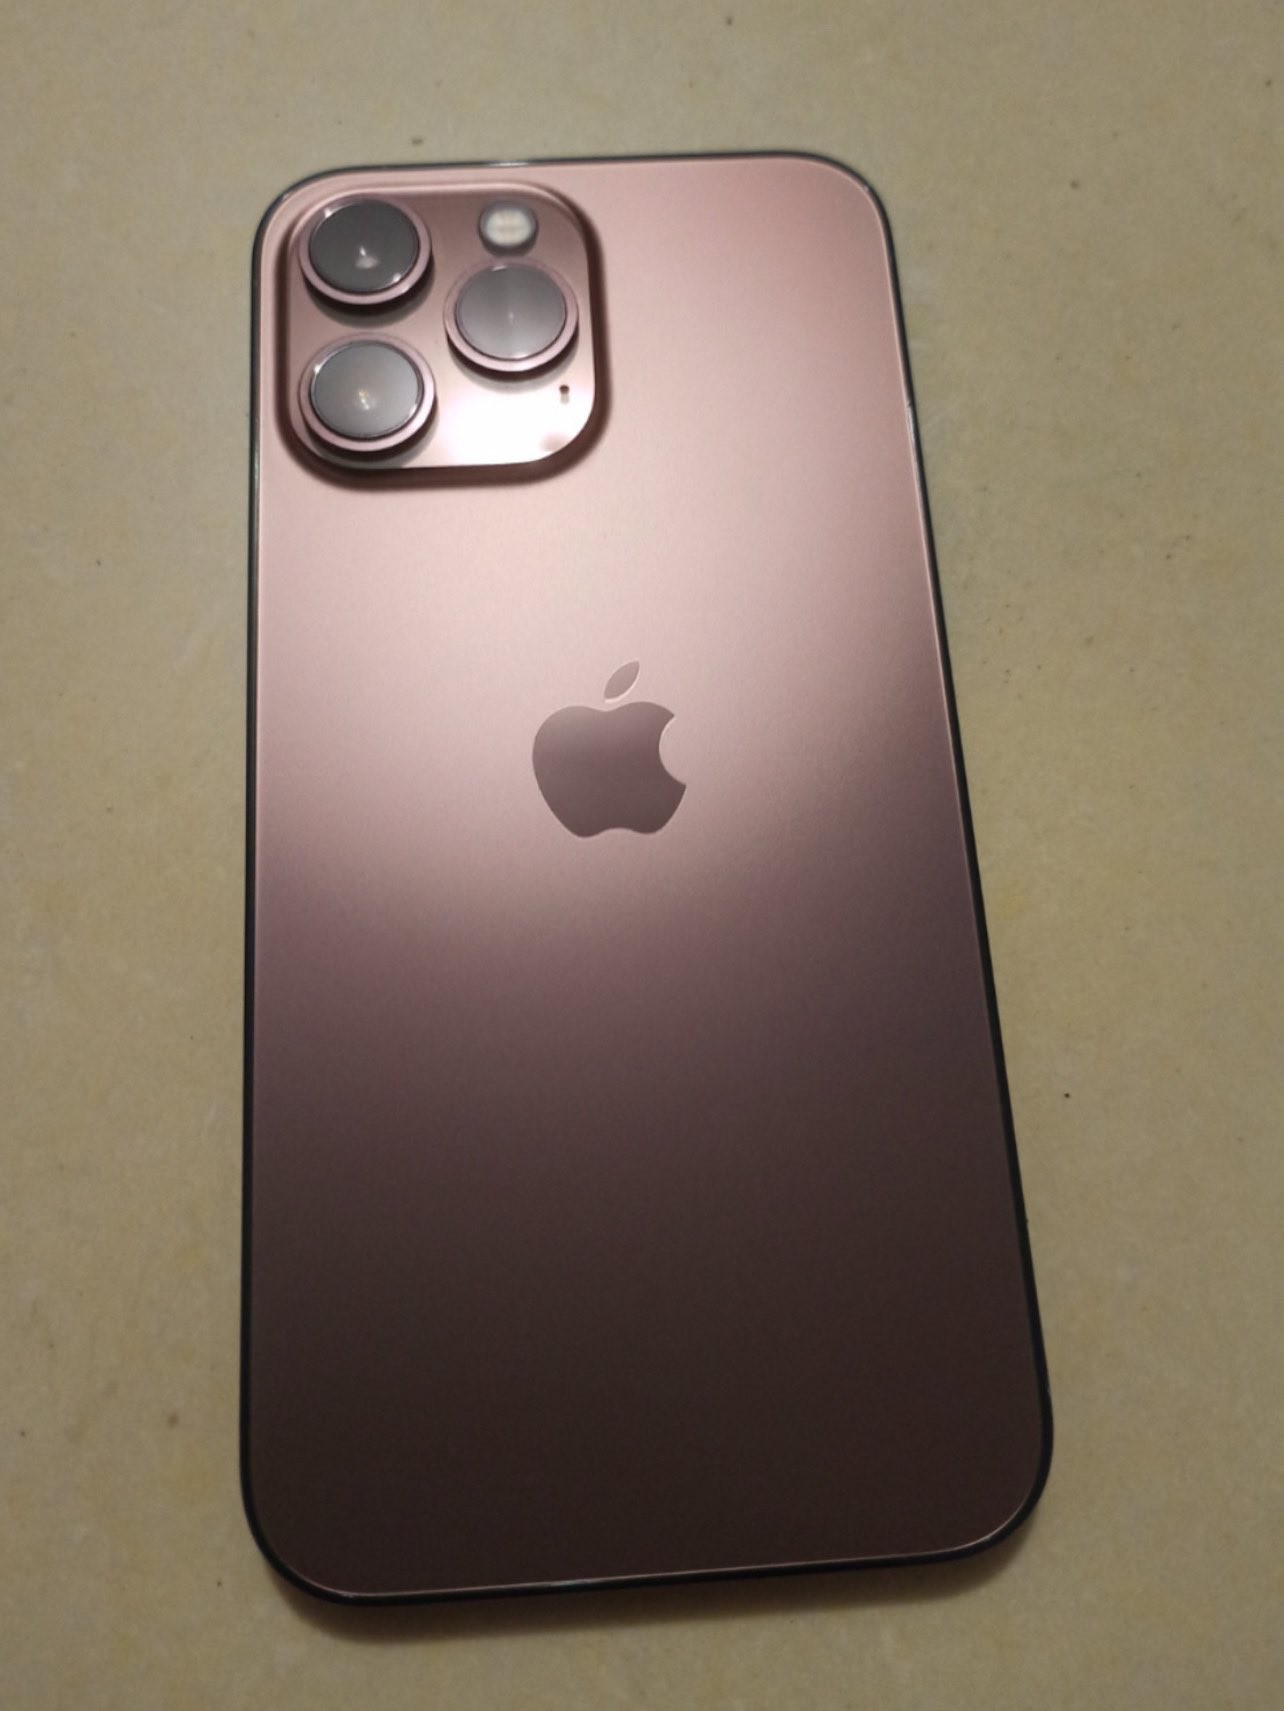 Refurbished Apple iPhone 6S Plus 16GB, Rose Gold - Locked AT&T ...